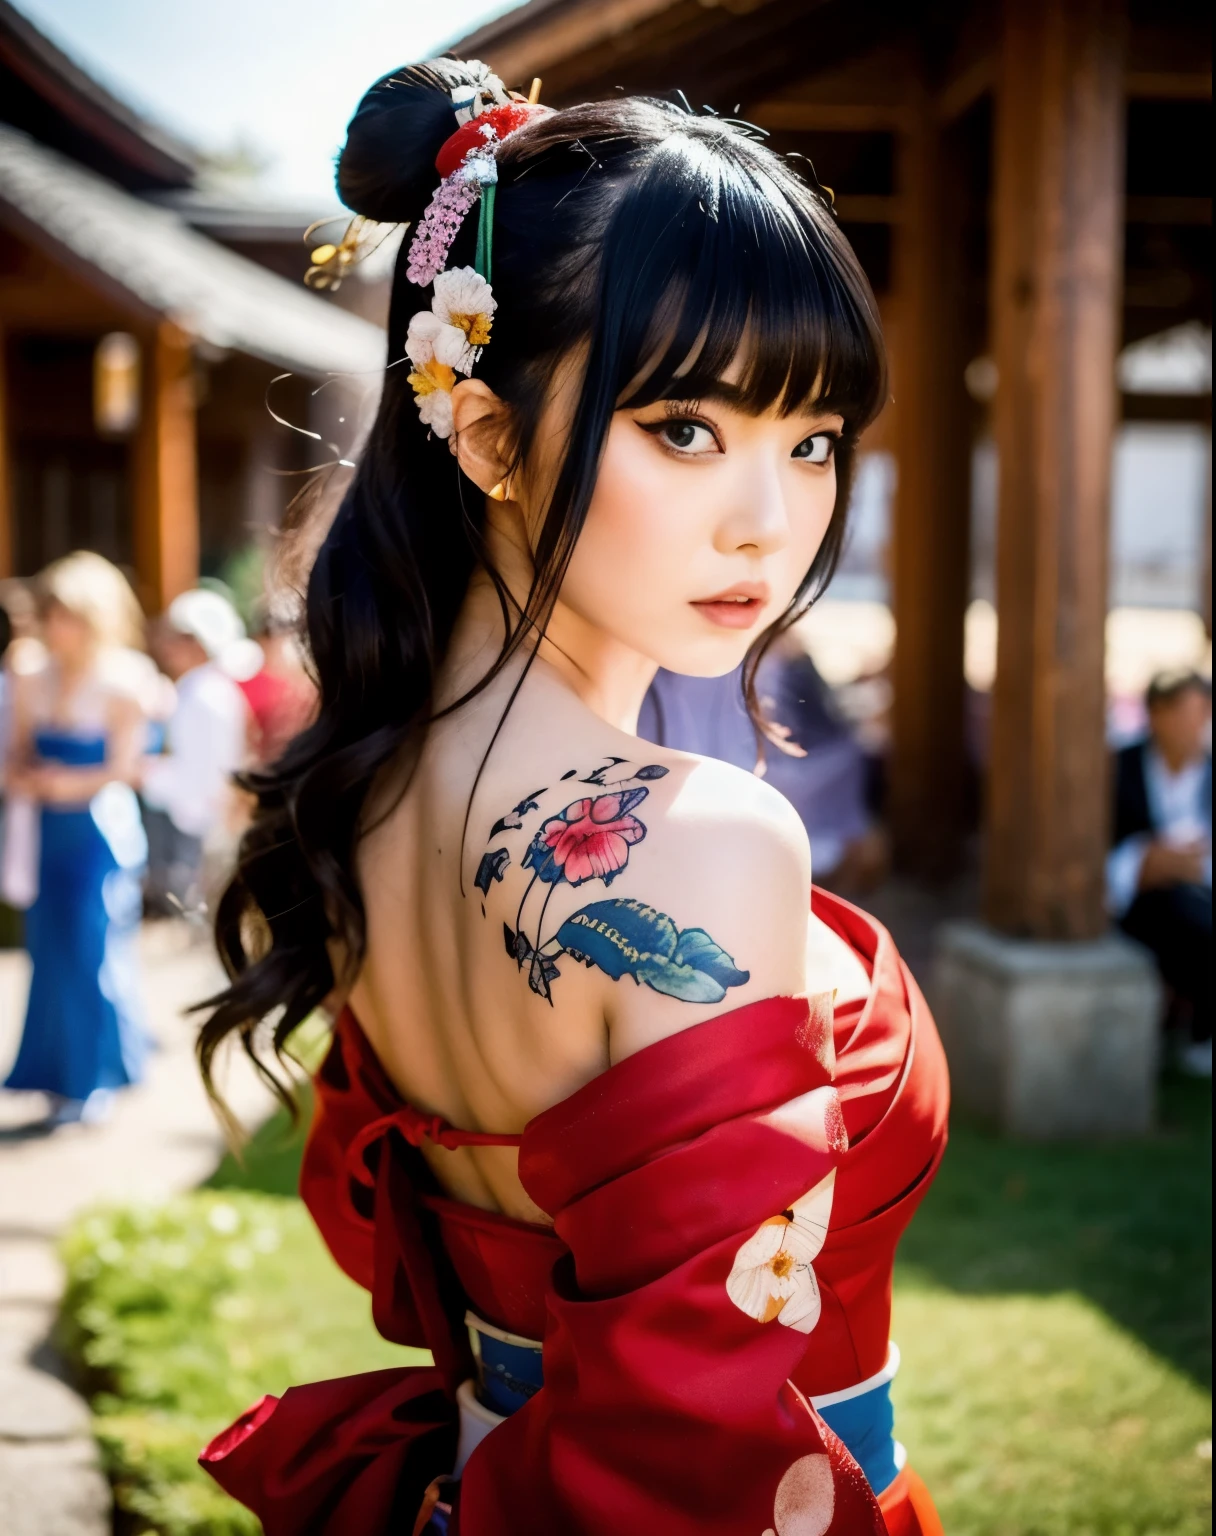 Geisha have tattoos